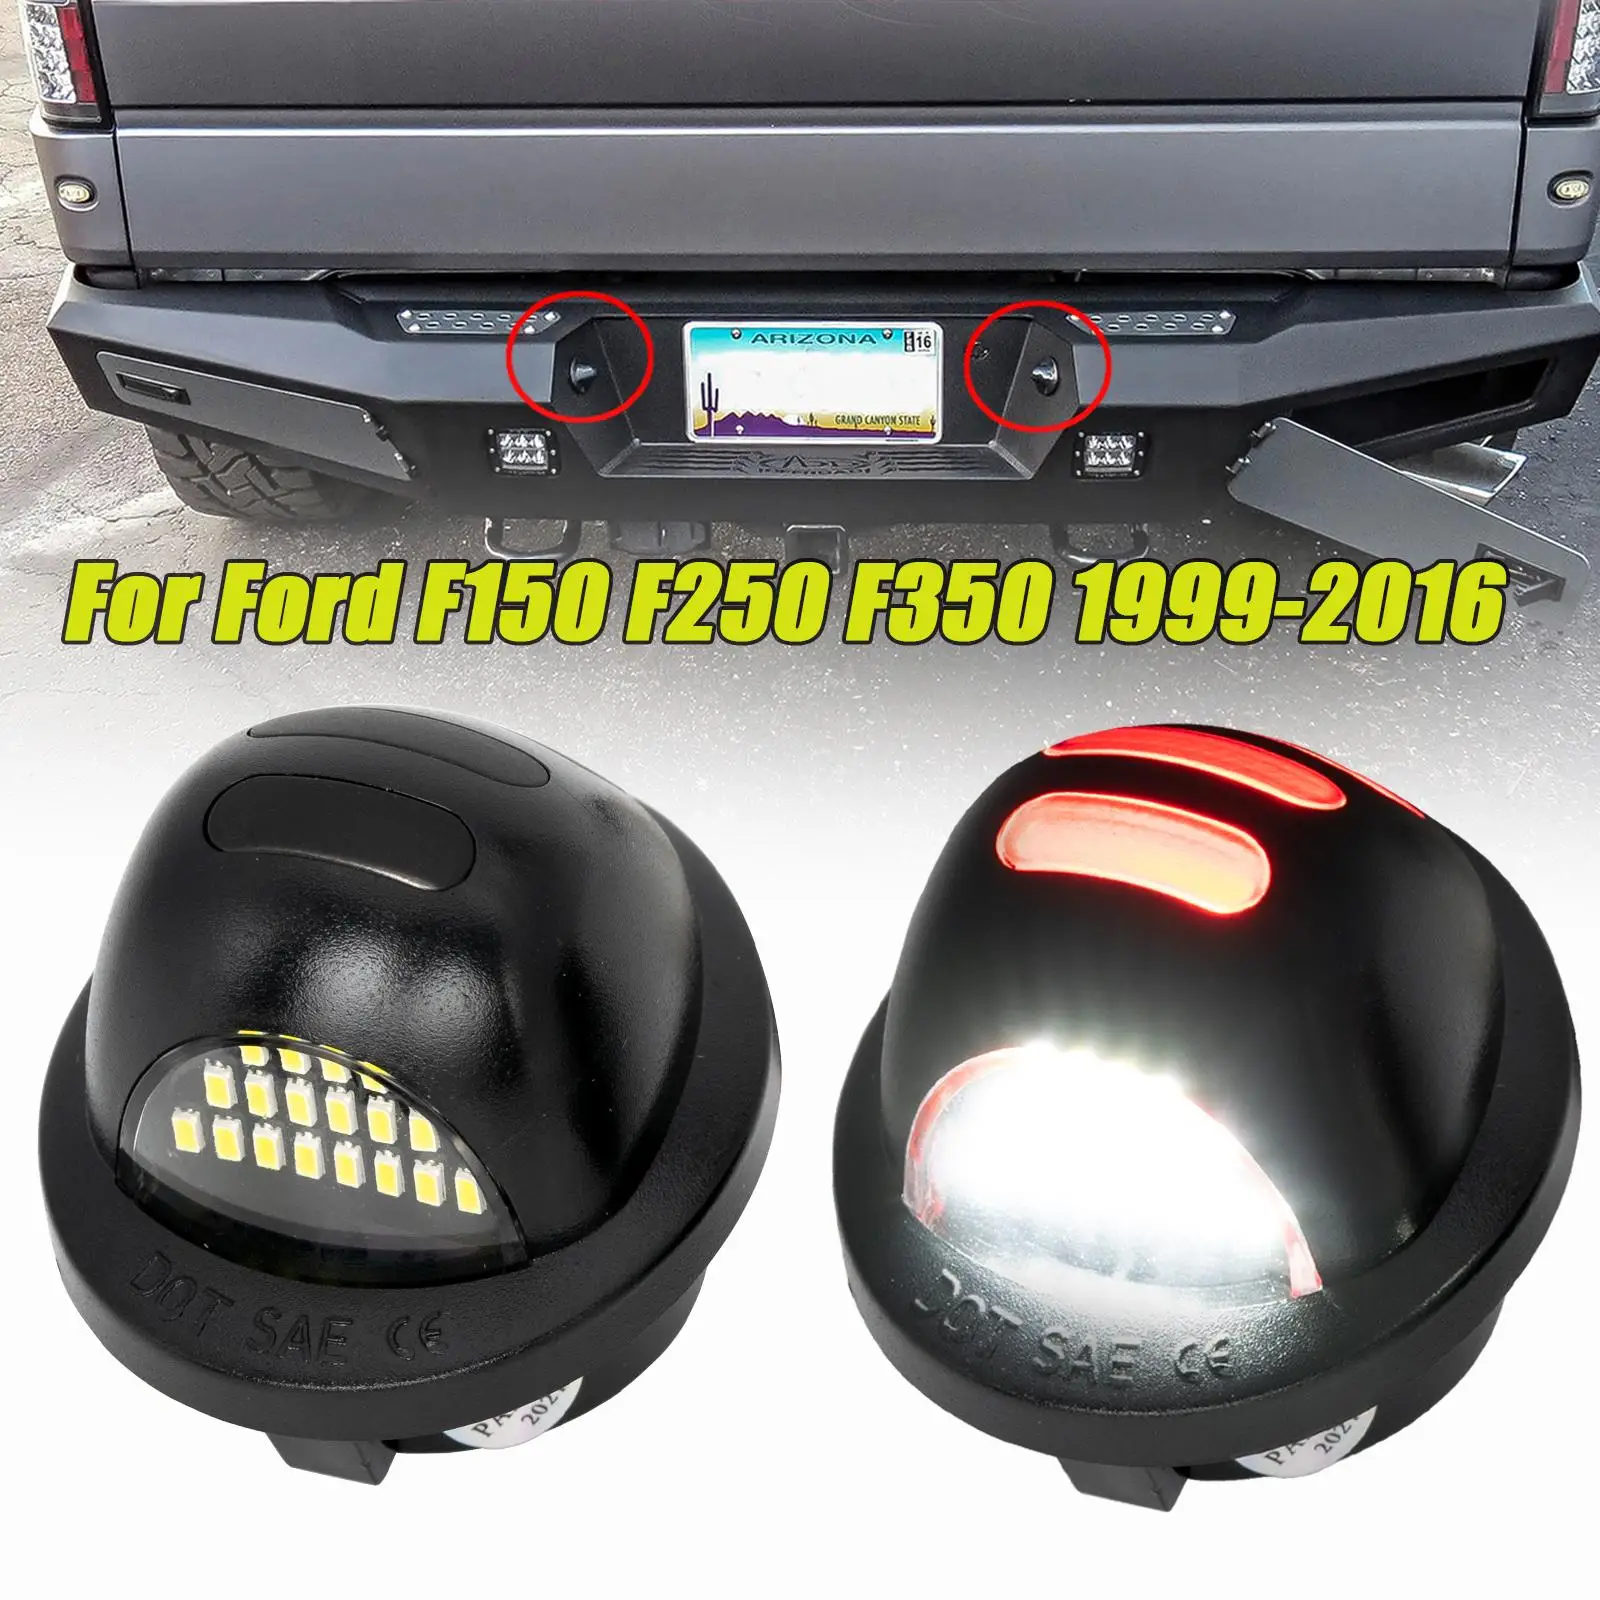 

LED License Plate Light Lamp Fit For F150 1990-2014 F250 F350 1999-2016 Ranger 1983-2011 Excursion Explorer Sport Trac Heritage